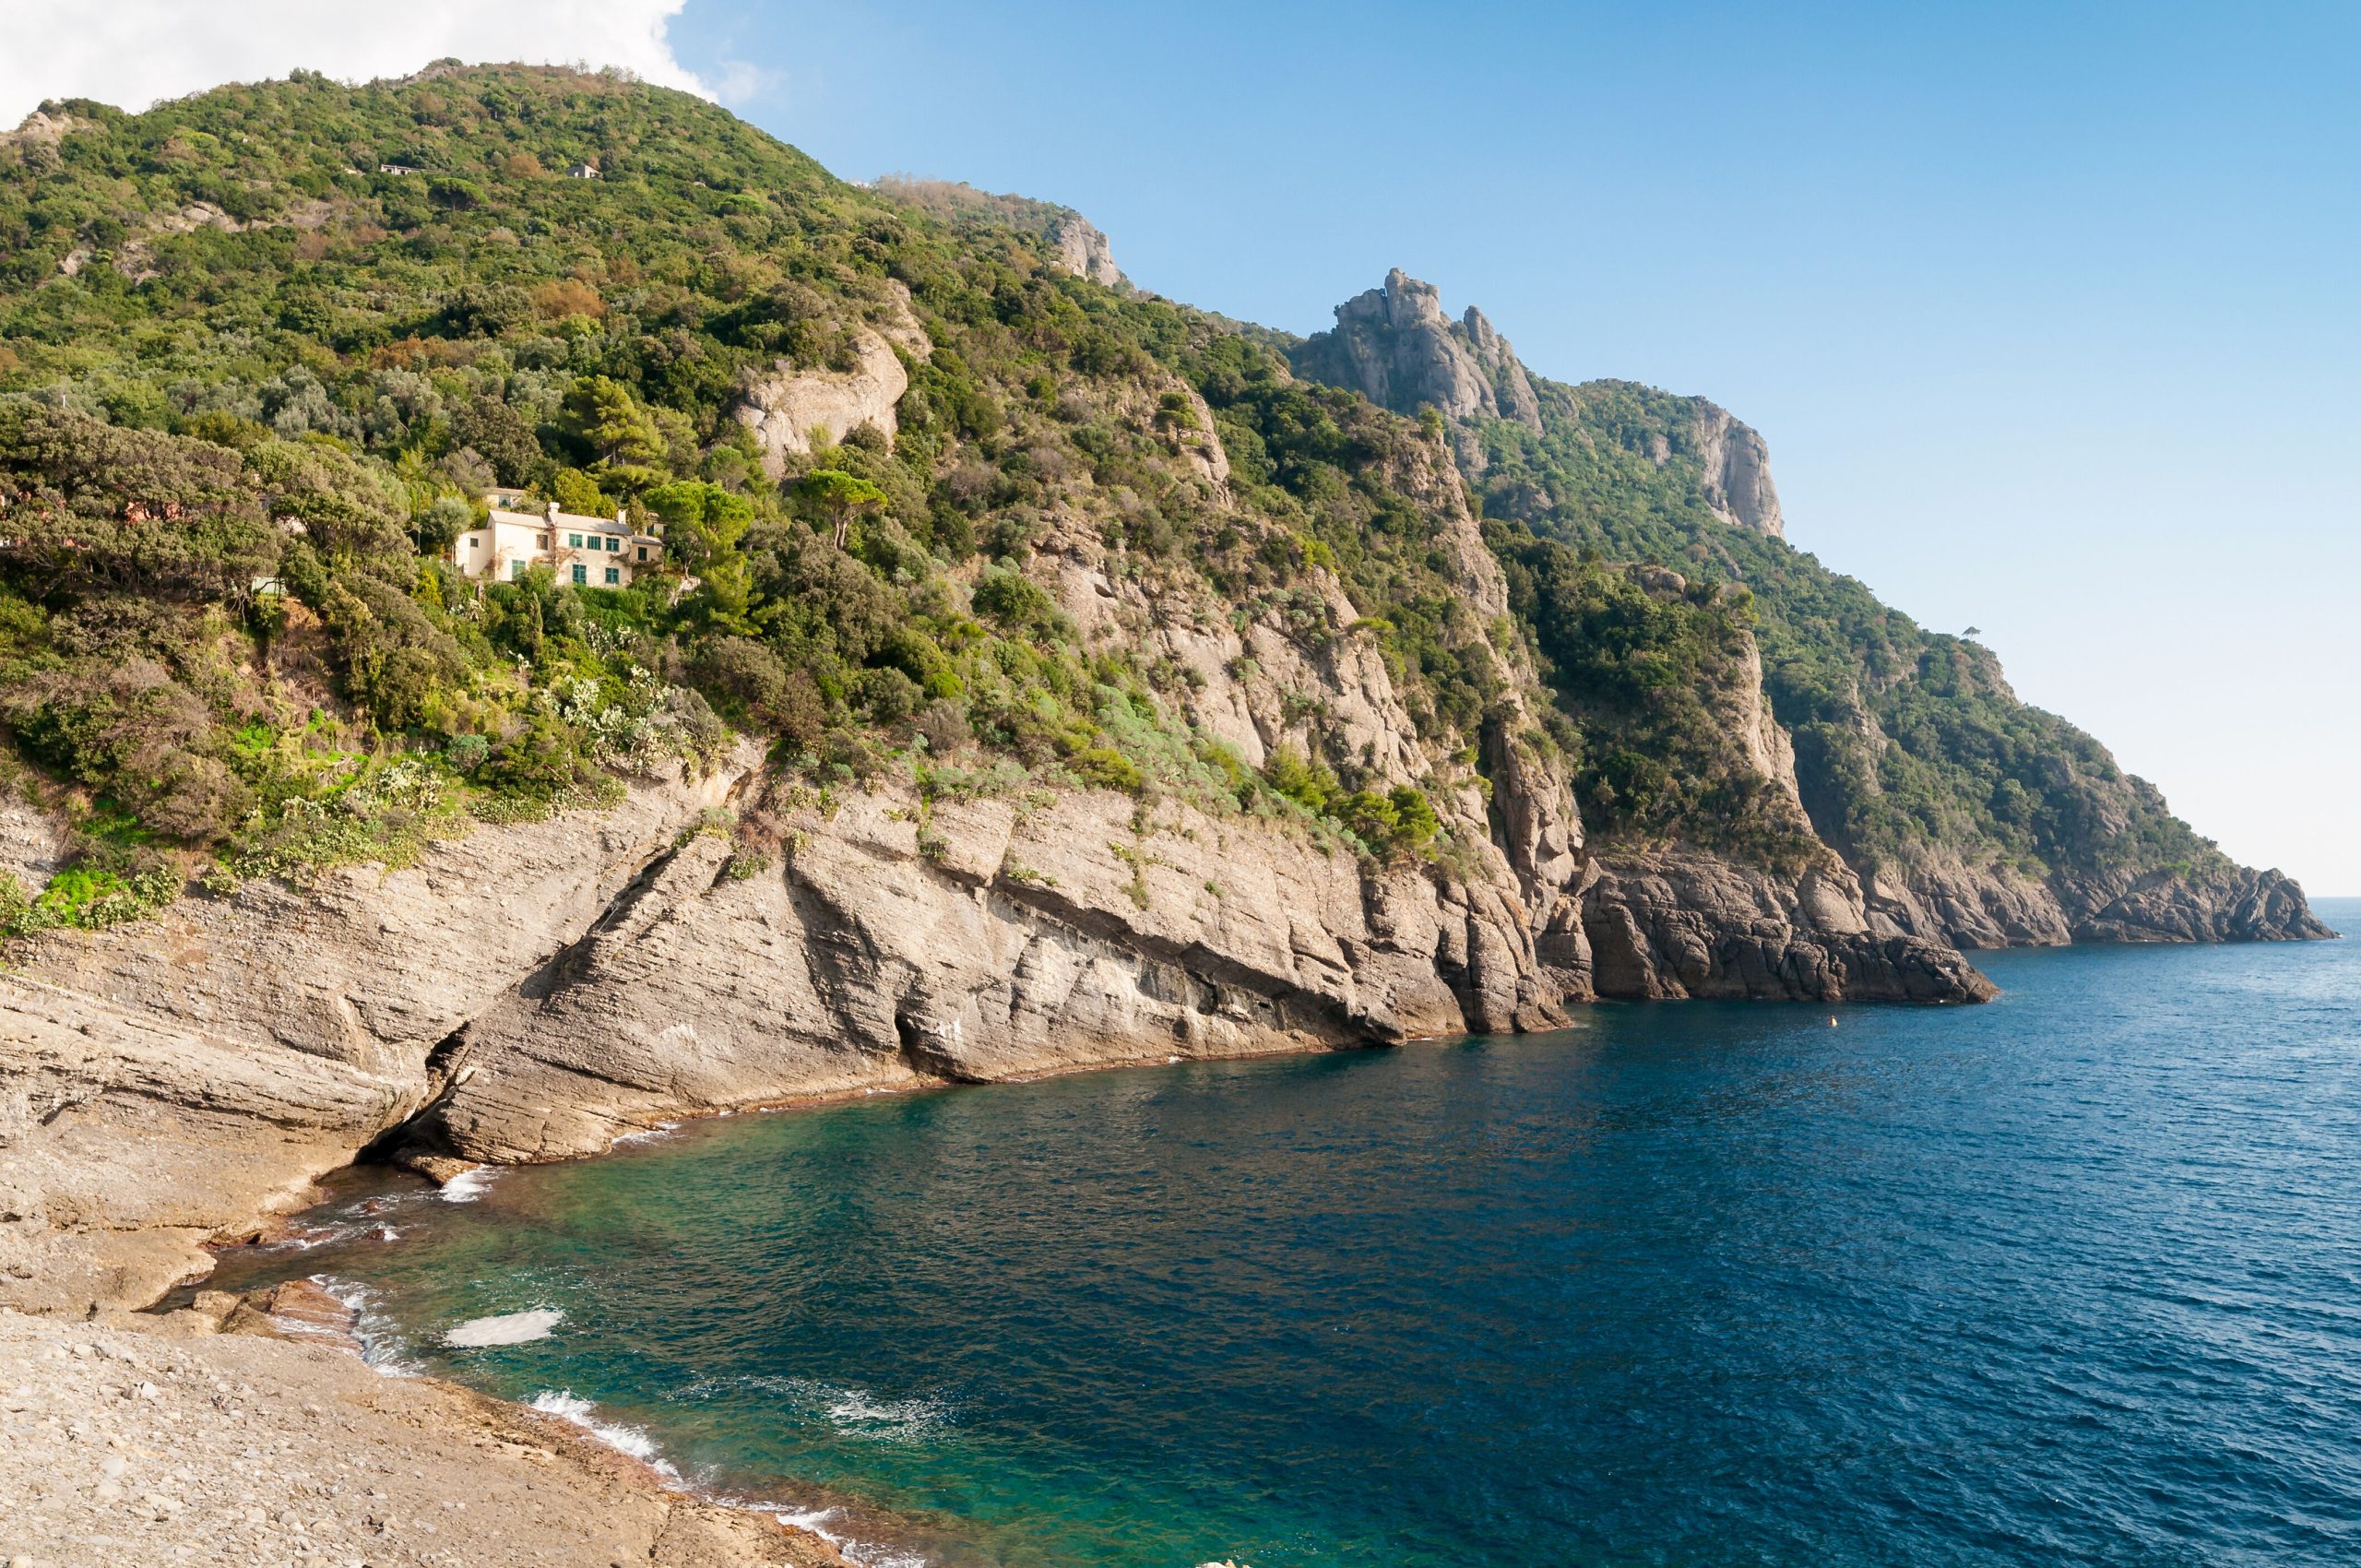 Le spiagge più belle d’Italia secondo Skyscanner | Rec News dir. Zaira Bartucca